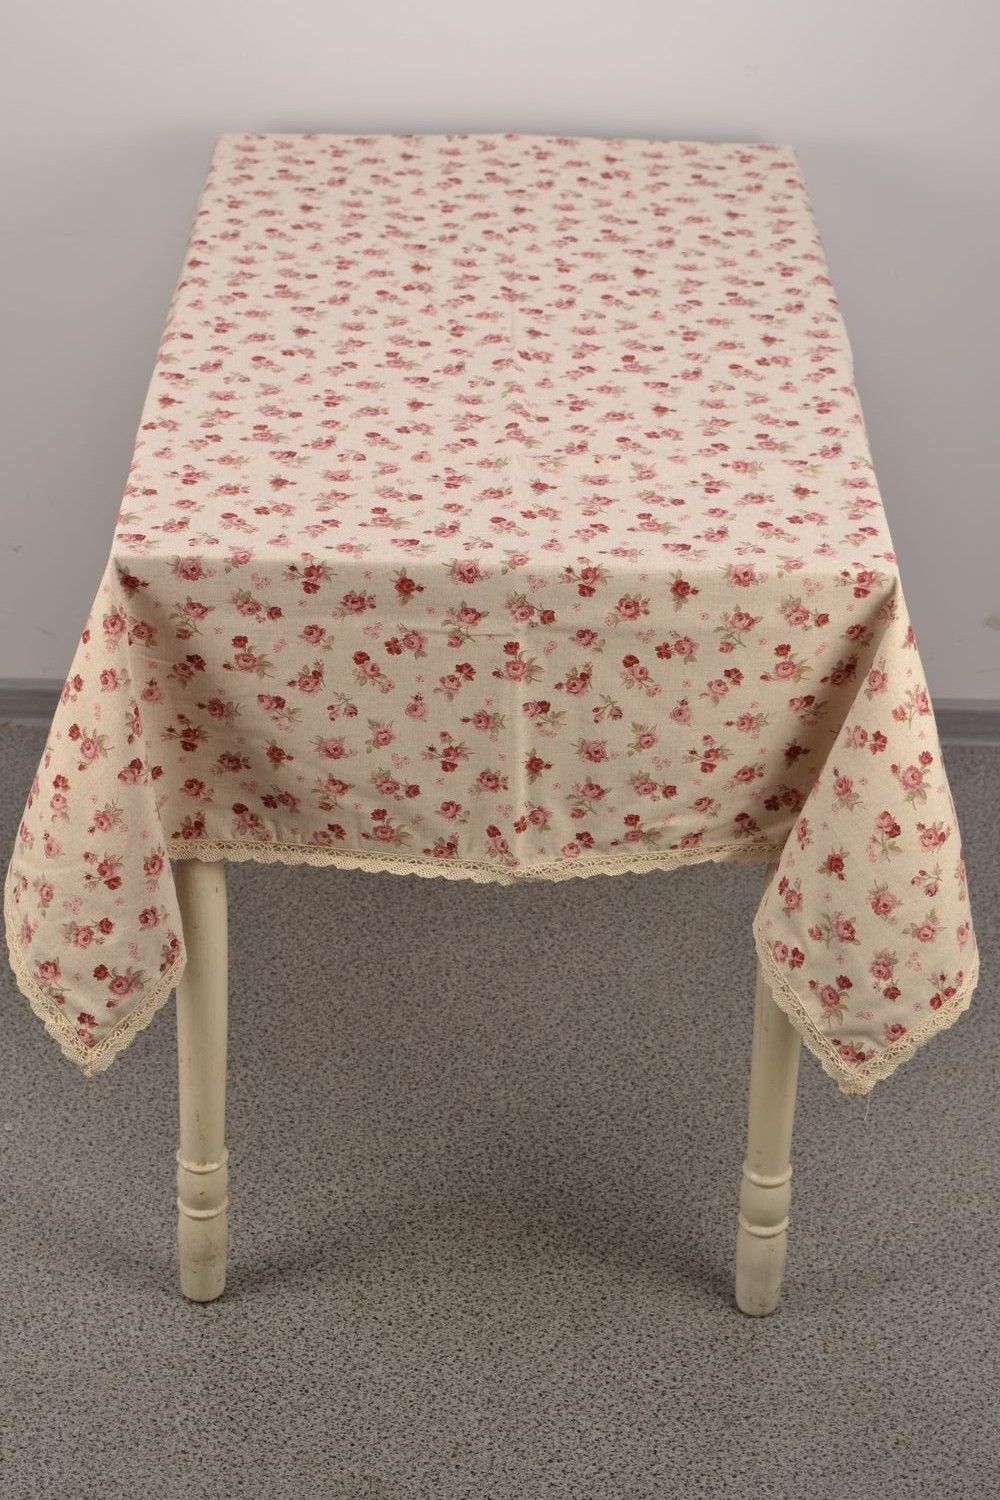 Stylish handmade tablecloth kitchen design home textiles table setting ideas photo 1